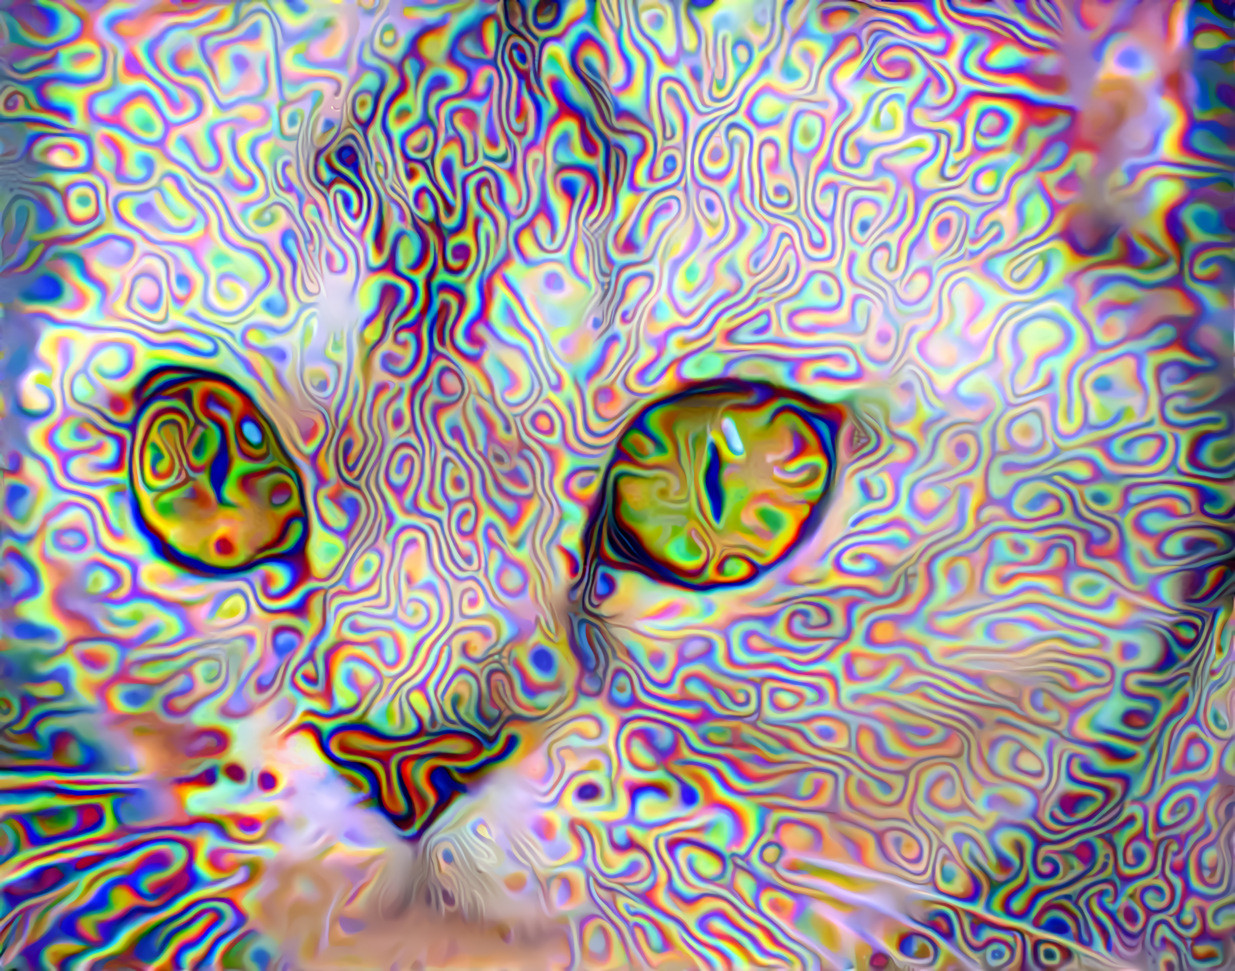 Psychedelic Cat- Style Art by Daniel W. Prust